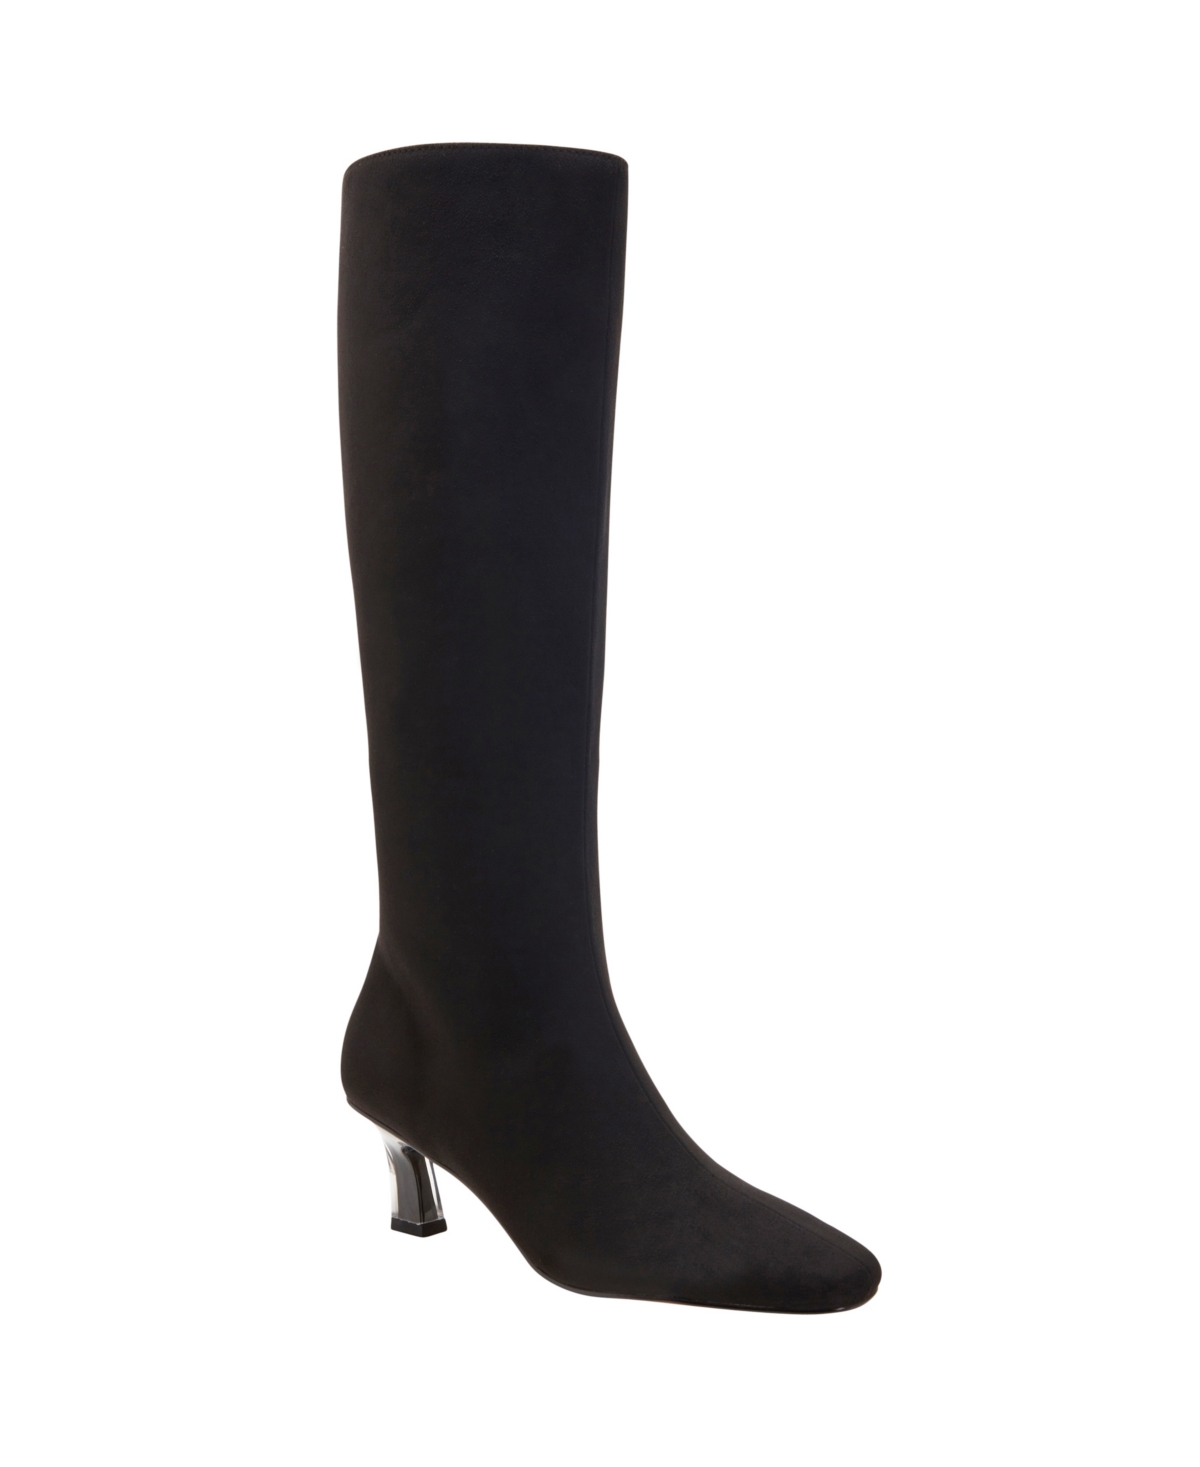 Women's The Zaharrah Square Toe Kitten Heel Regular Calf Boots - Black